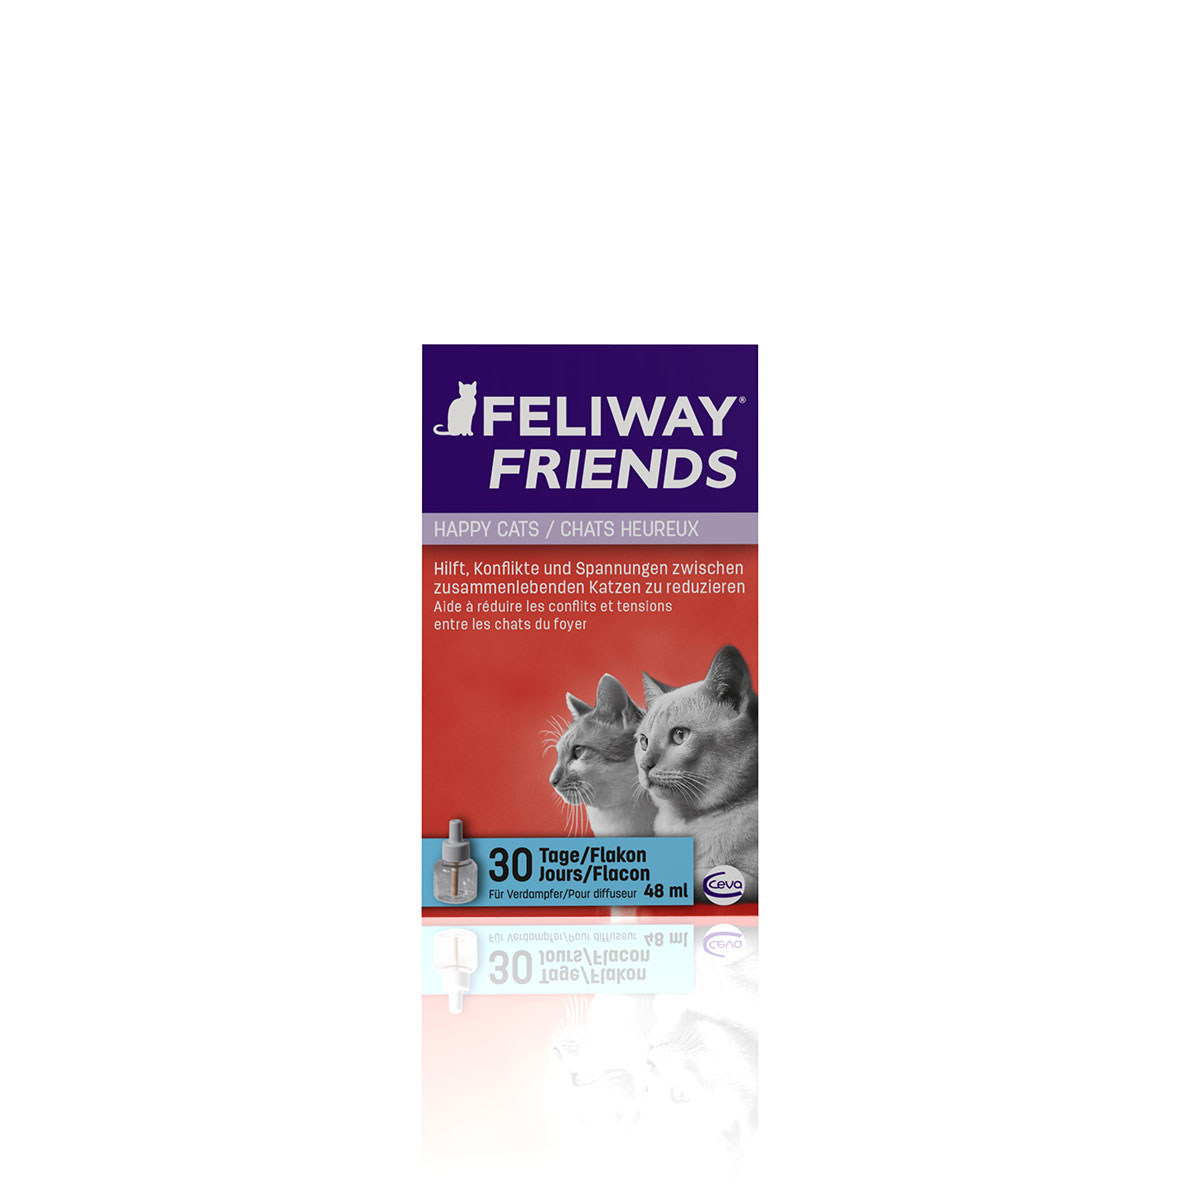 Feliway Friends 30-Tage Nachfüllflakon 48ml 48ml